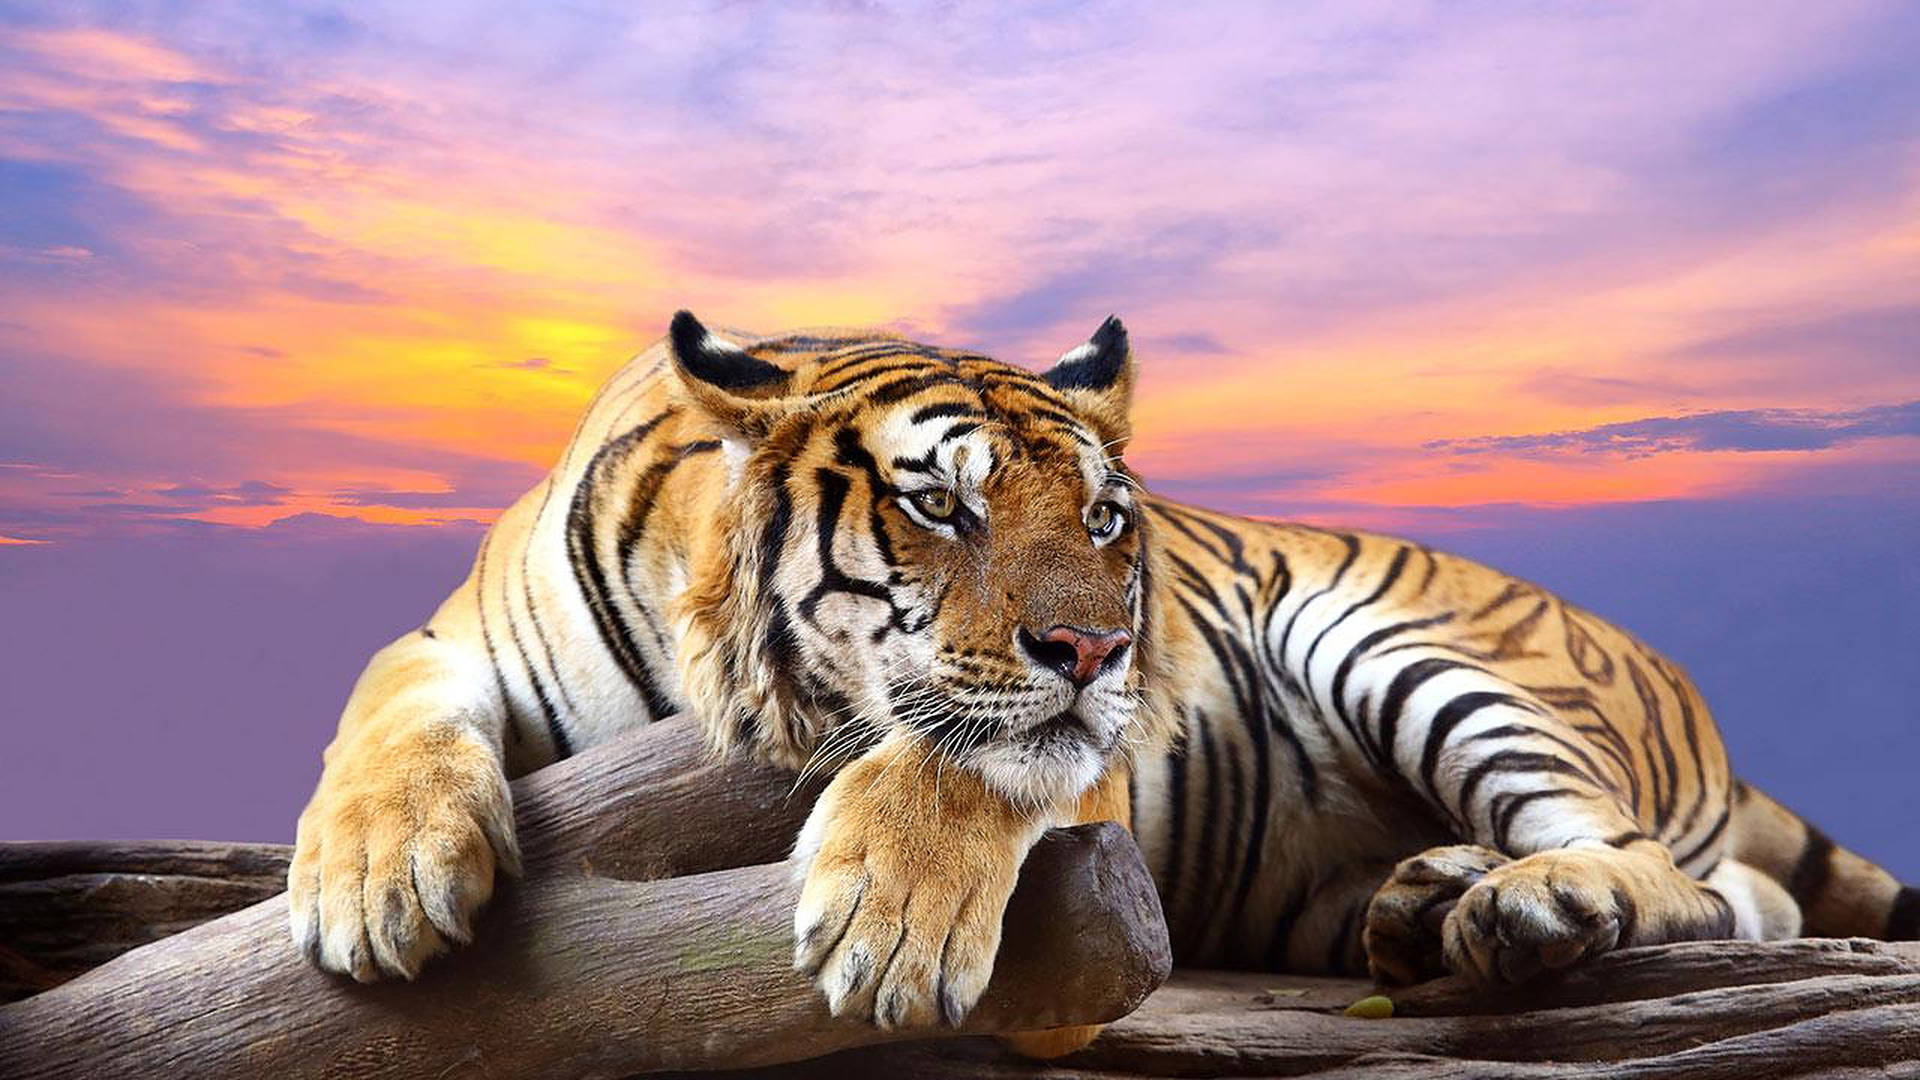 Wild Animal Tiger During Sunset Background